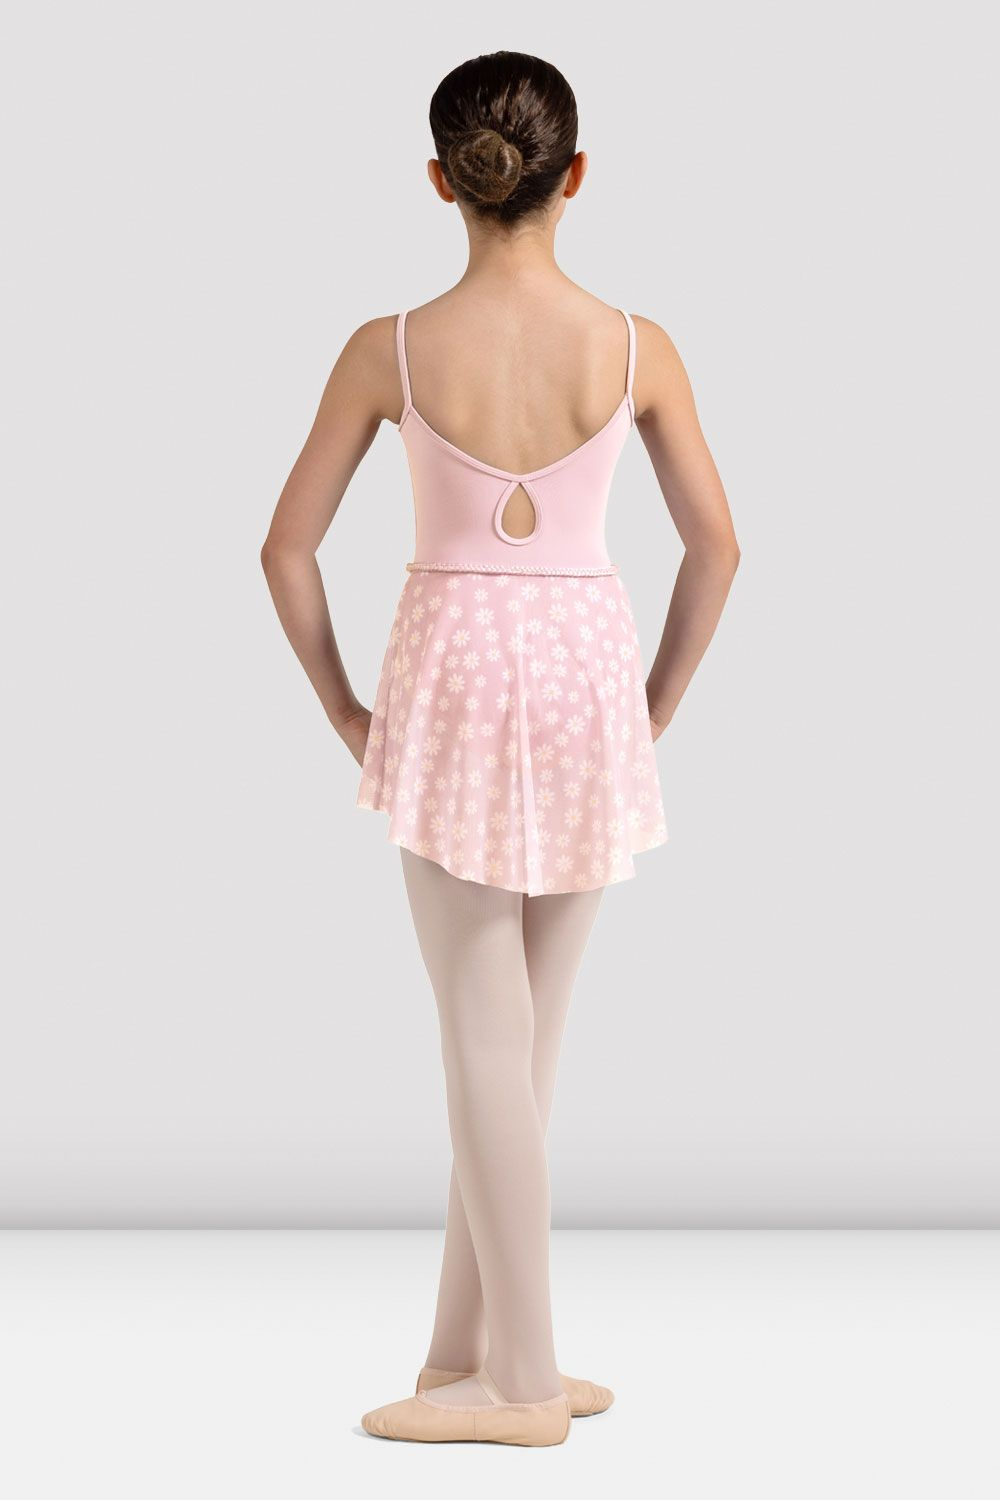 Mirella MS900C Miami Mesh Skirt